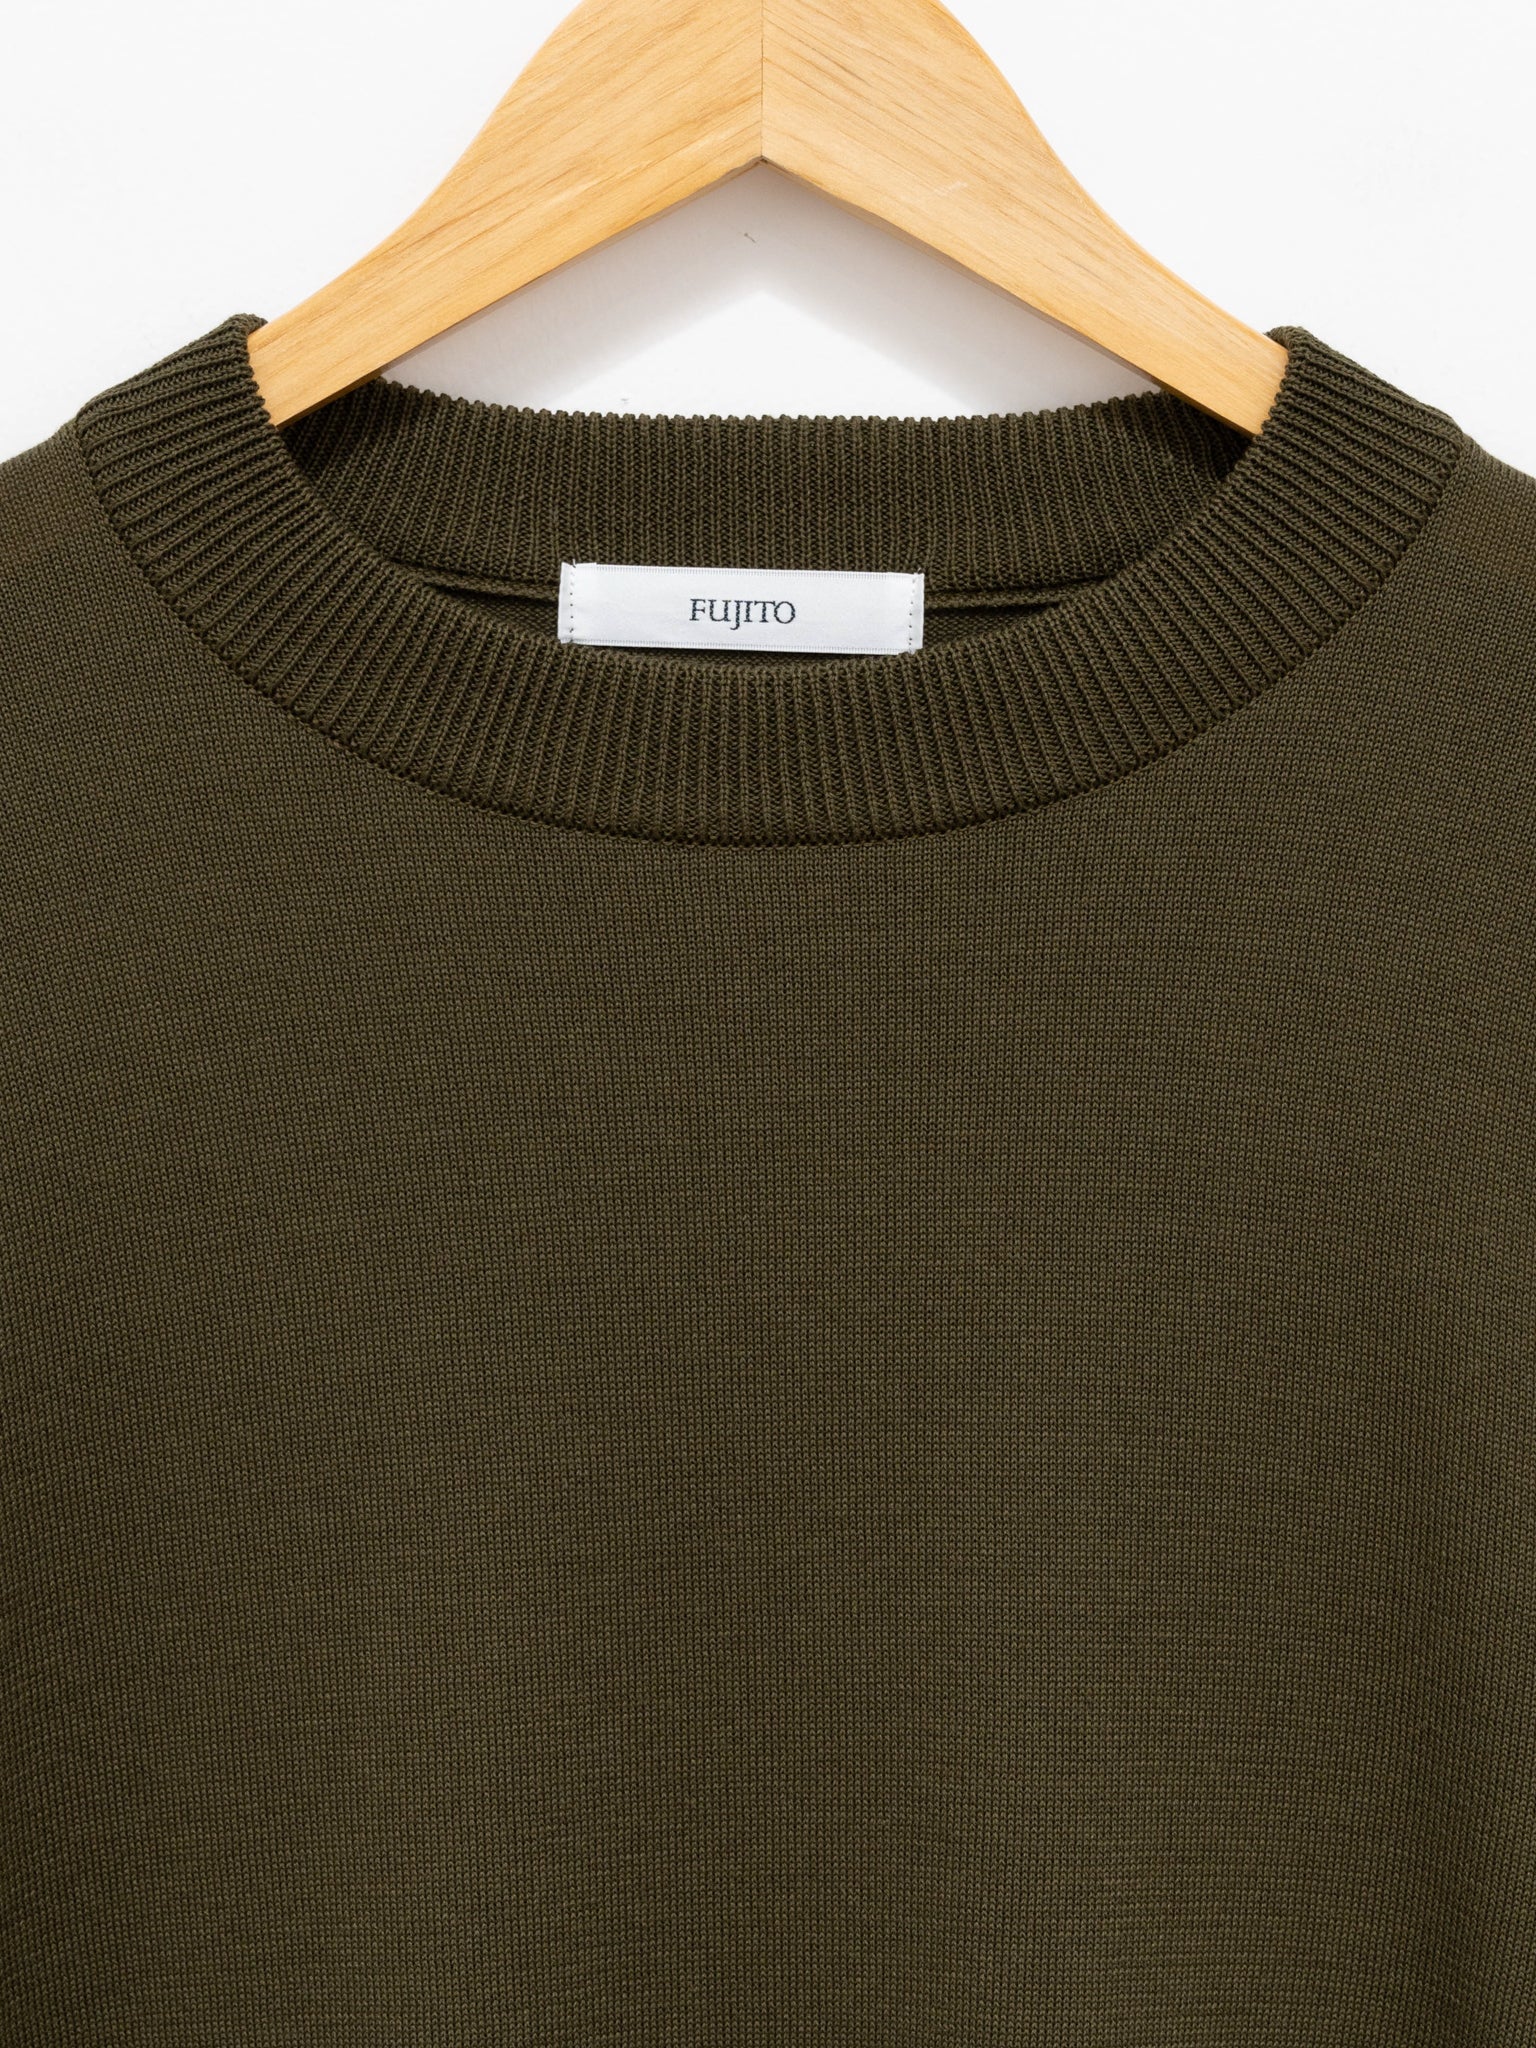 Namu Shop - Fujito Side Rib Sweater - Khaki